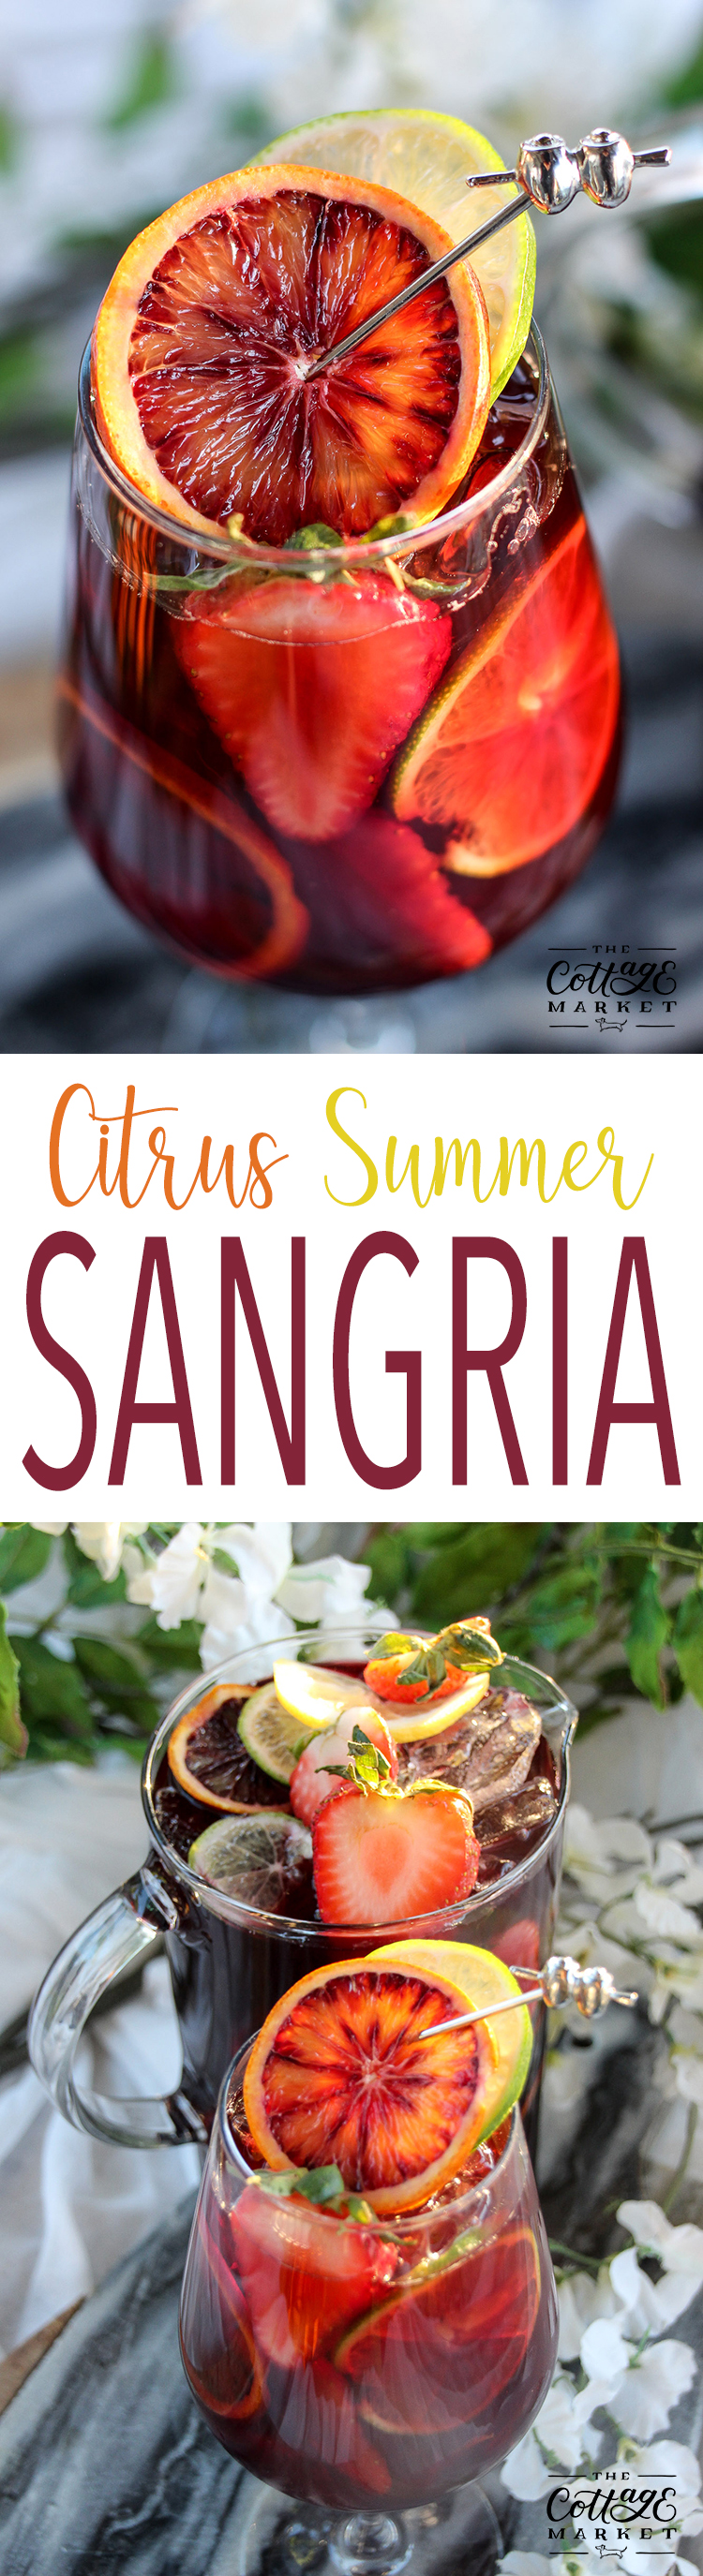 http://thecottagemarket.com/wp-content/uploads/2017/06/Citrus-Summer-Sangria-TOWER-1.jpg